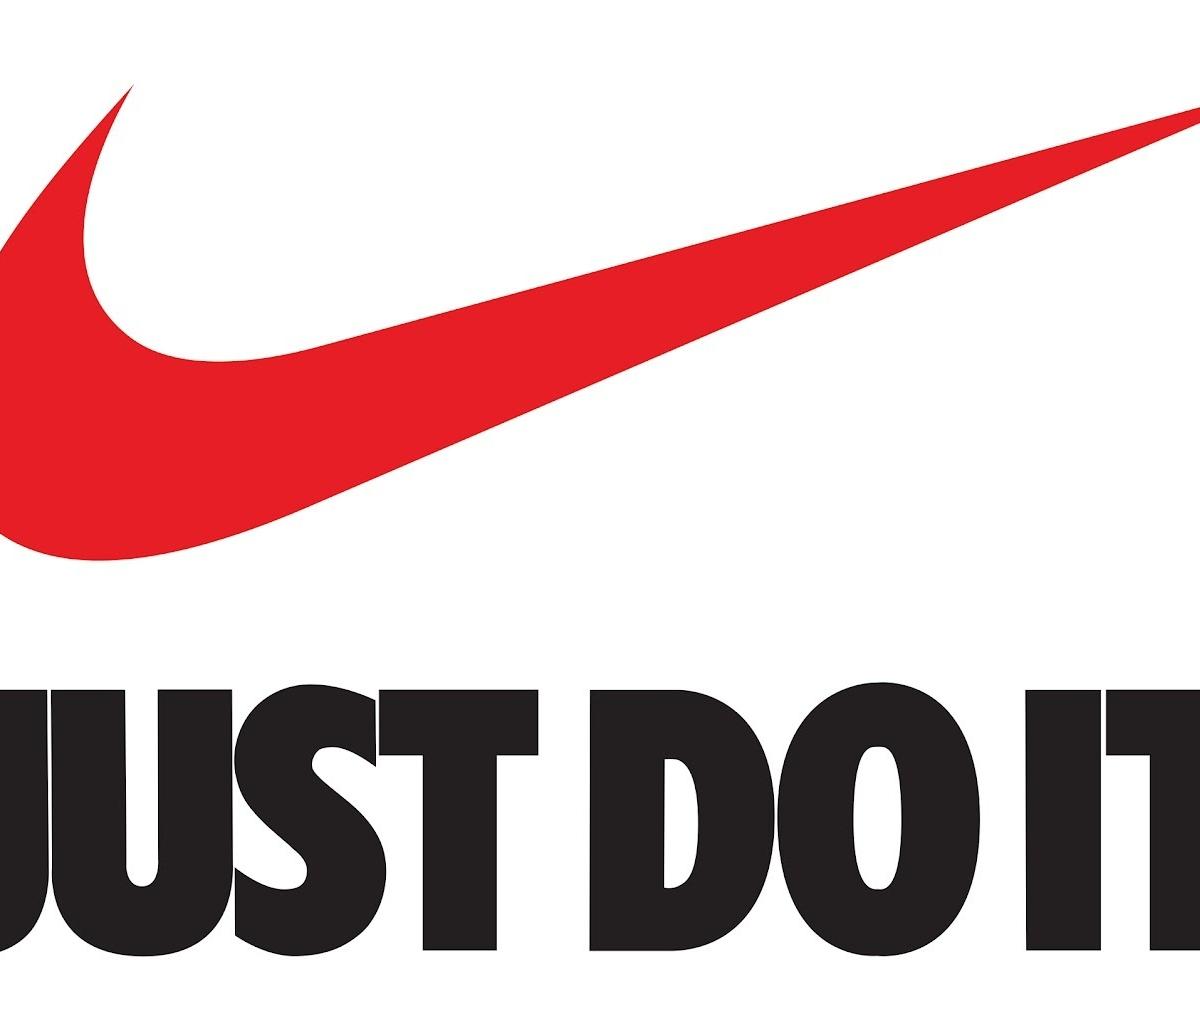 literalmente he equivocado Vagabundo Nike Uses Jessie J, Pique to Celebrate 25th Anniversary of 'Just Do It'  Slogan | News, Scores, Highlights, Stats, and Rumors | Bleacher Report